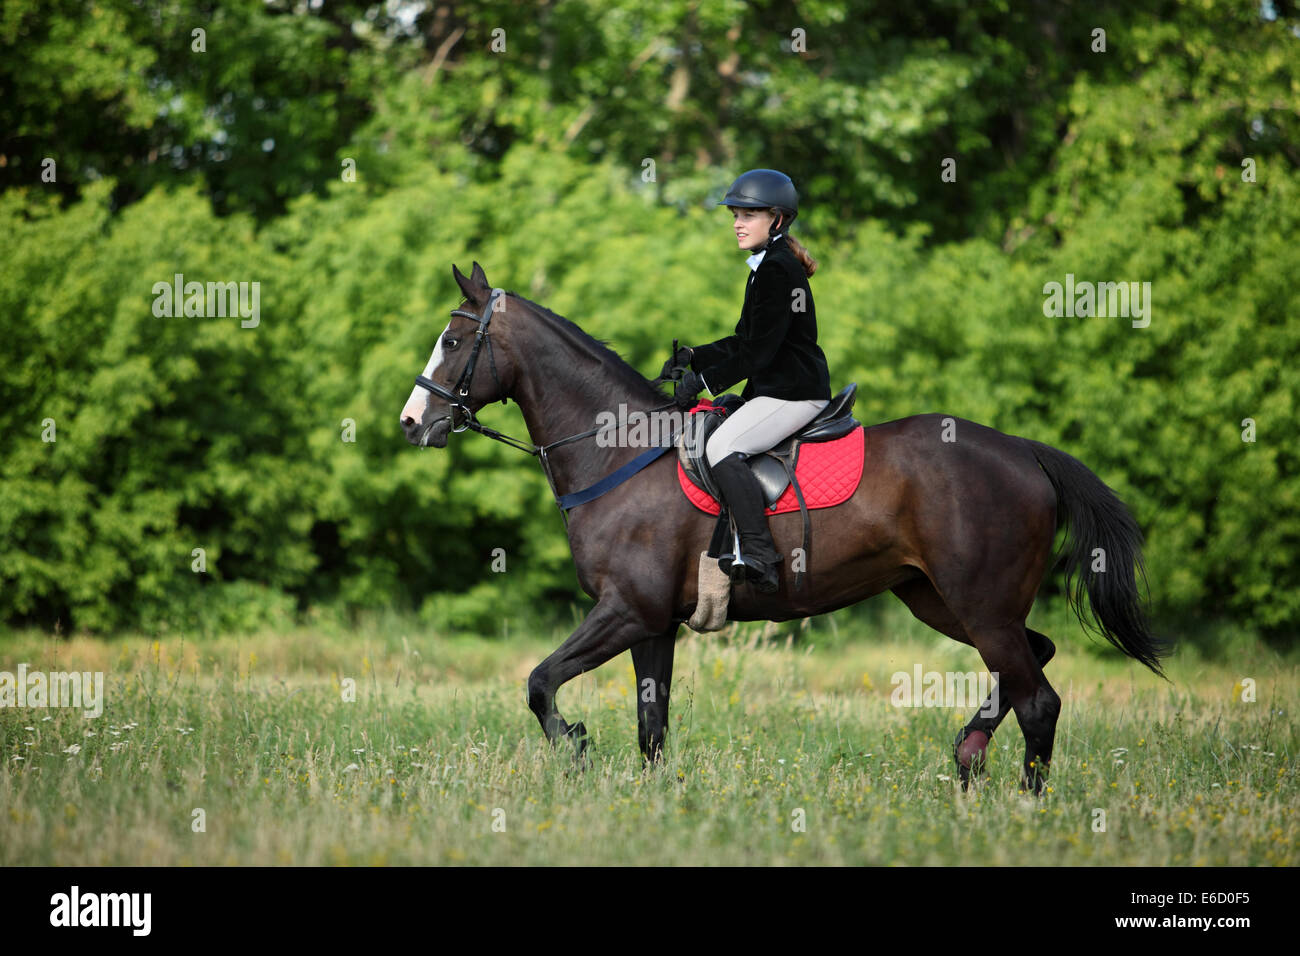 Horseriding, trot, riding school Stock Photo